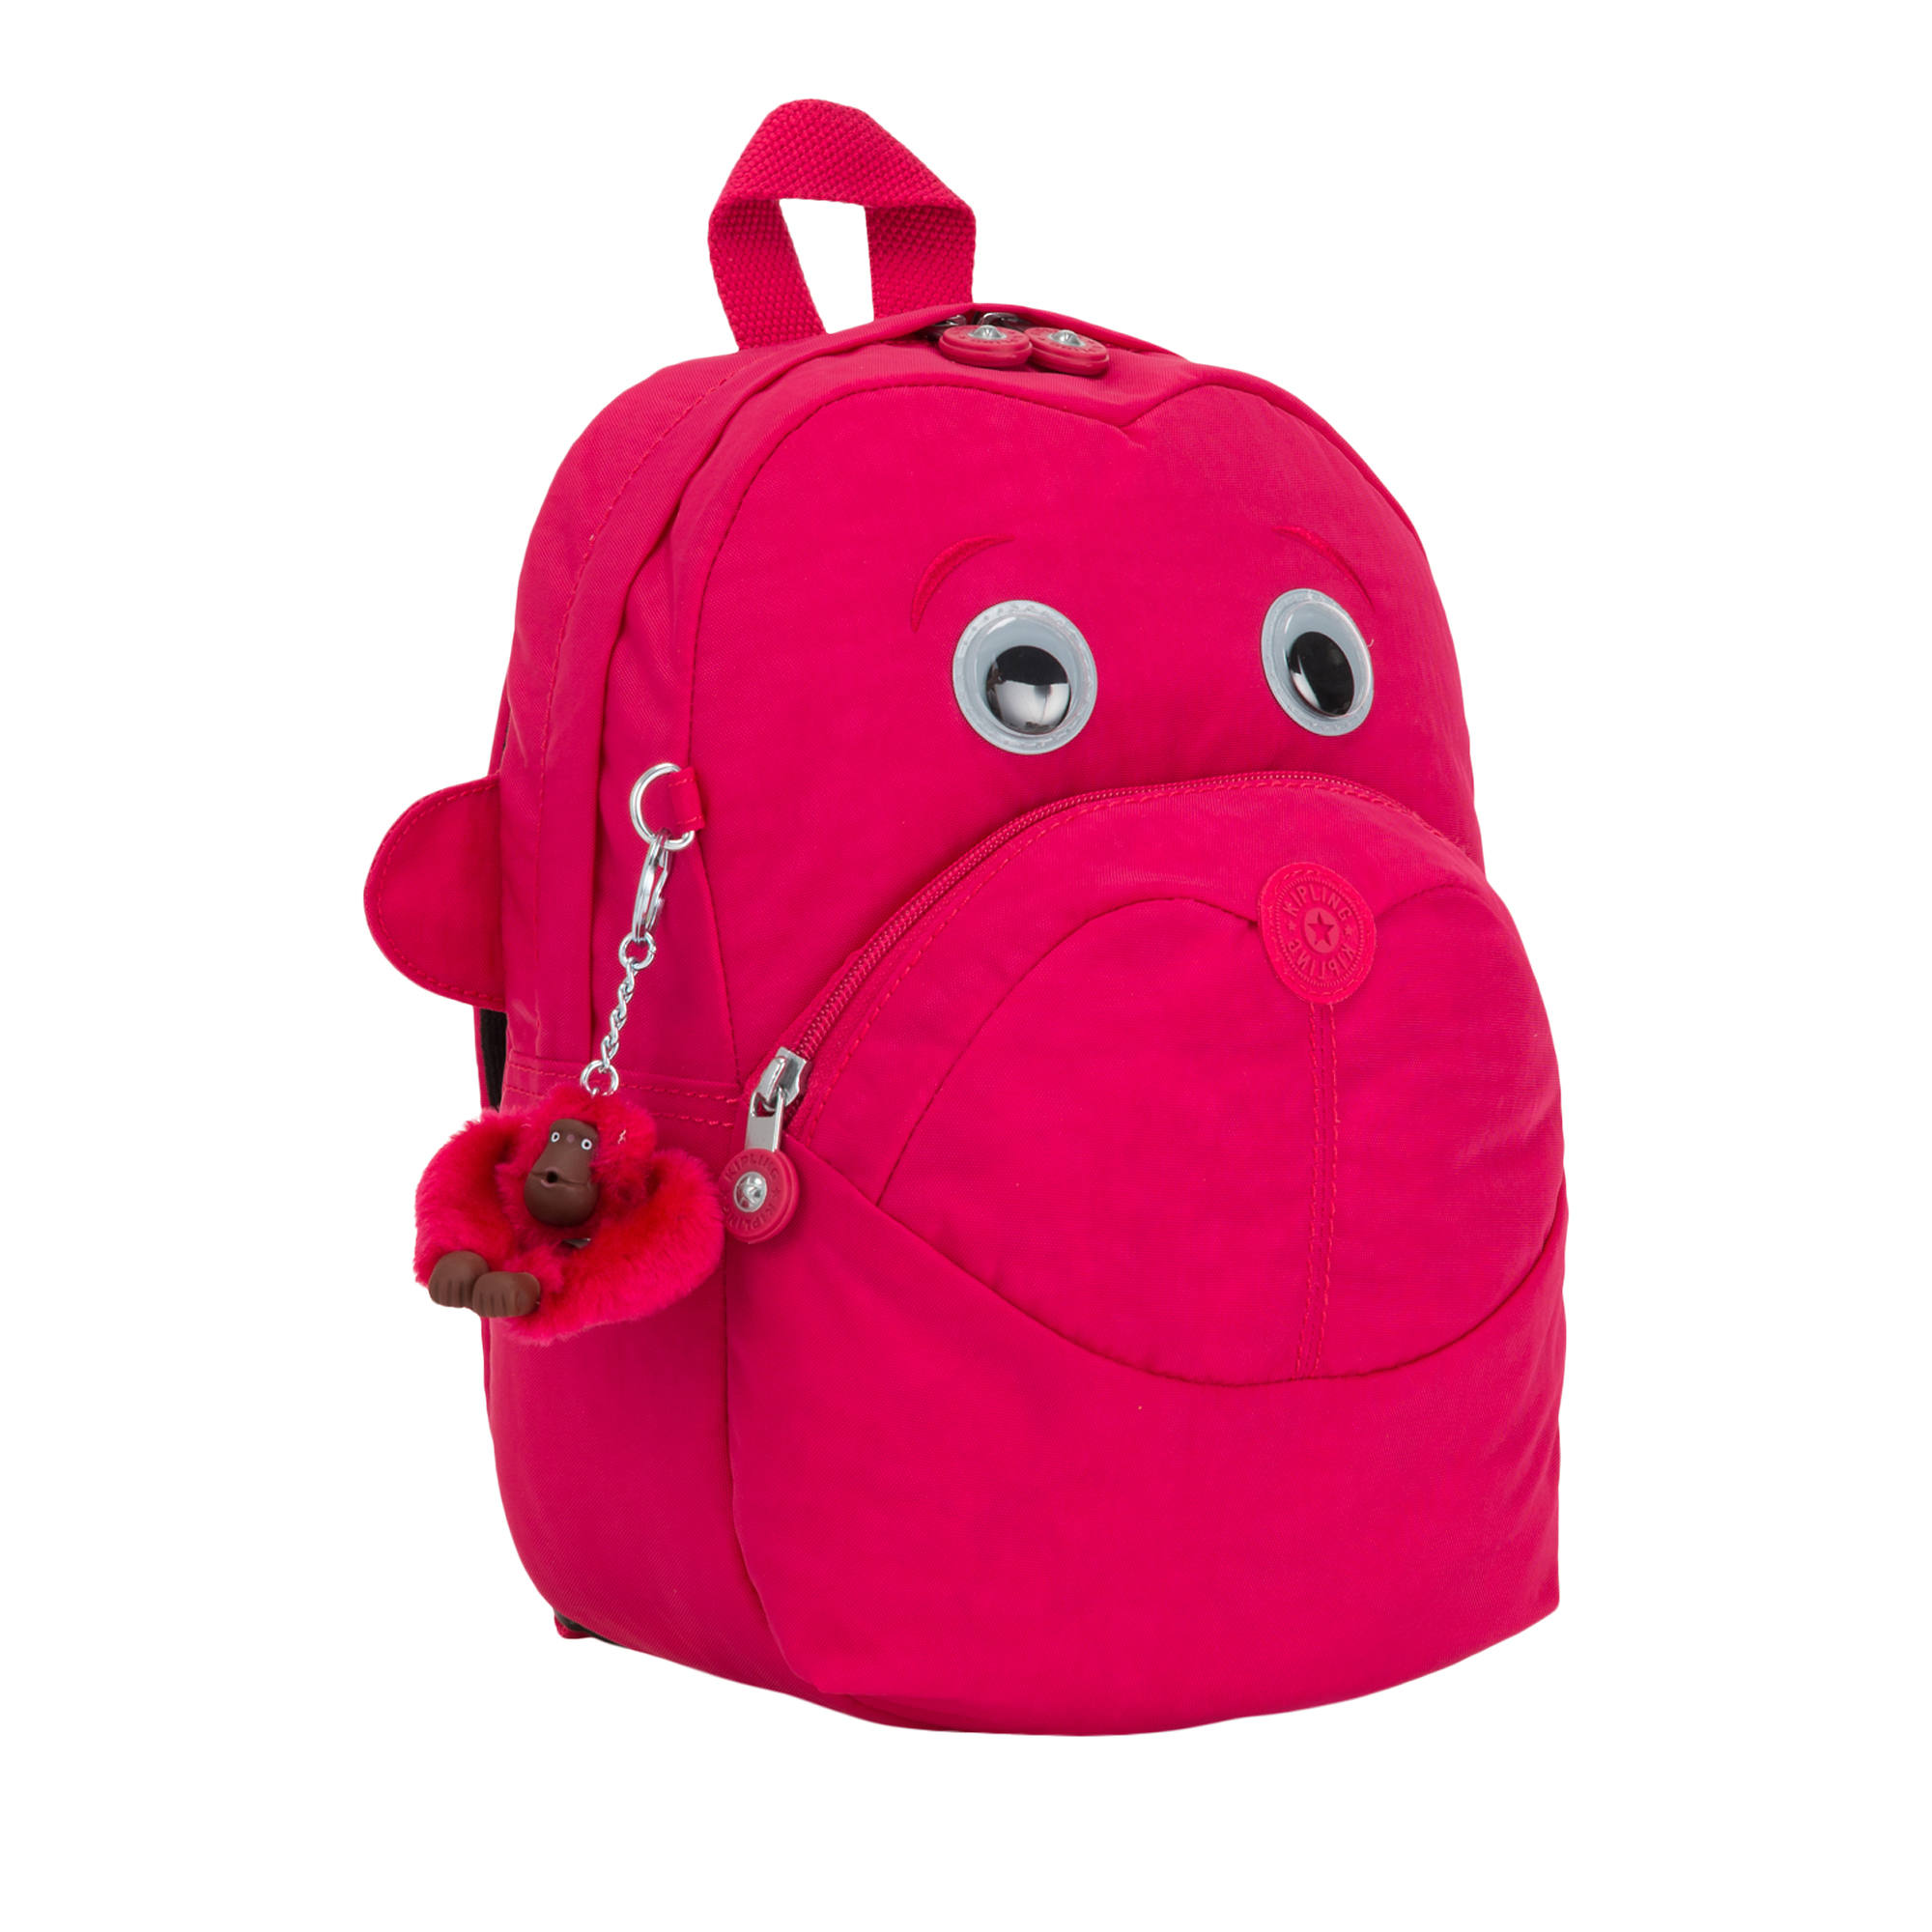 Kipling Faster Kids Small Printed Backpack | eBay